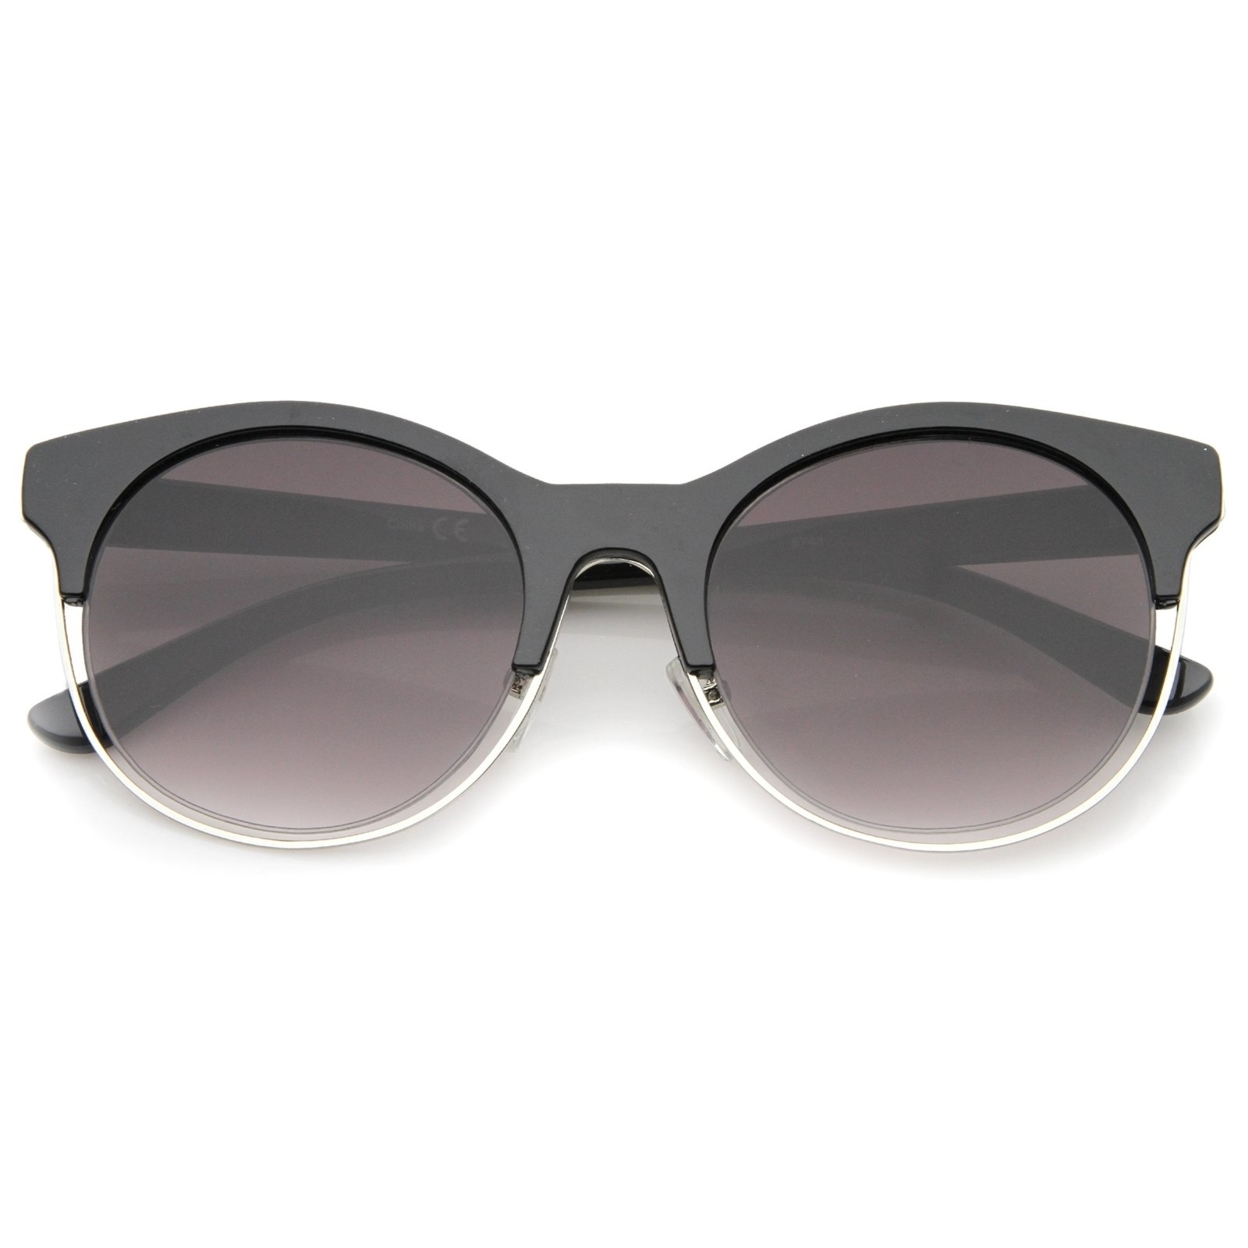 Modern Half Frame Metal Trim Round Cat Eye Sunglasses 53mm - Shiny Tortoise-Gold / Brown